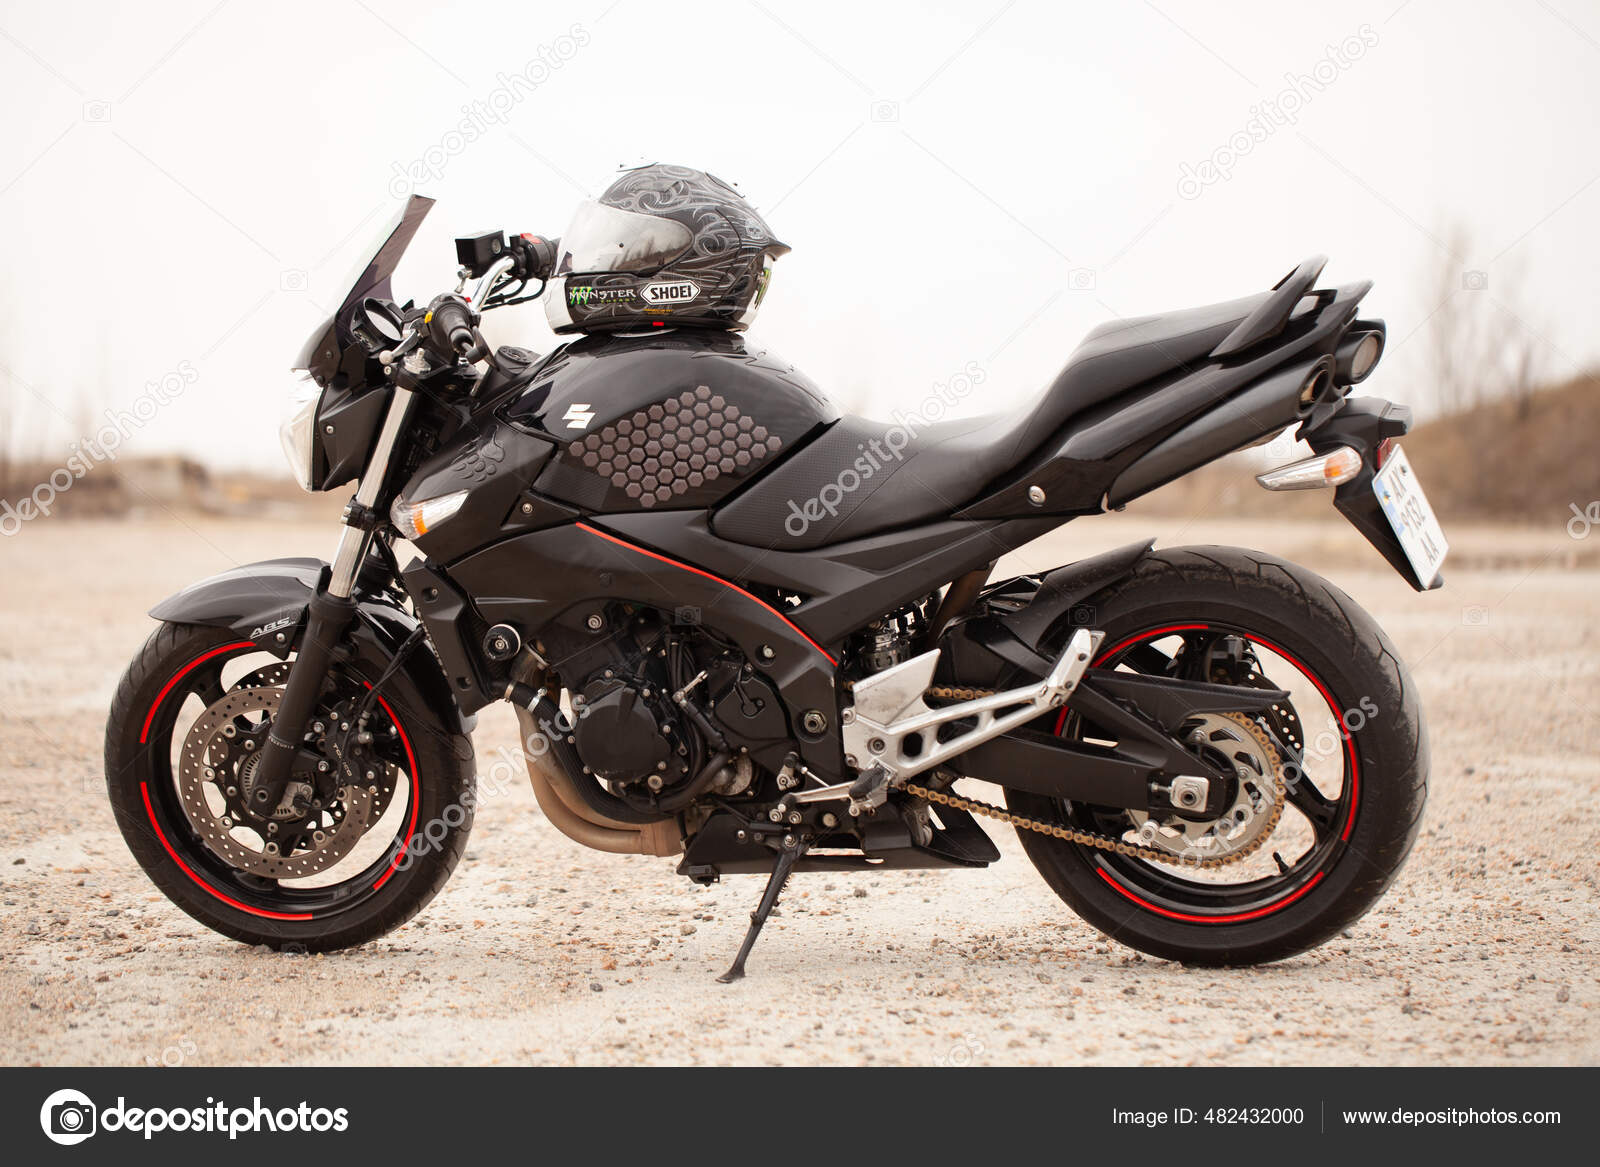 https://st2.depositphotos.com/3975201/48243/i/1600/depositphotos_482432000-stock-photo-suzuki-gsr600-sport-black-motorcycle.jpg